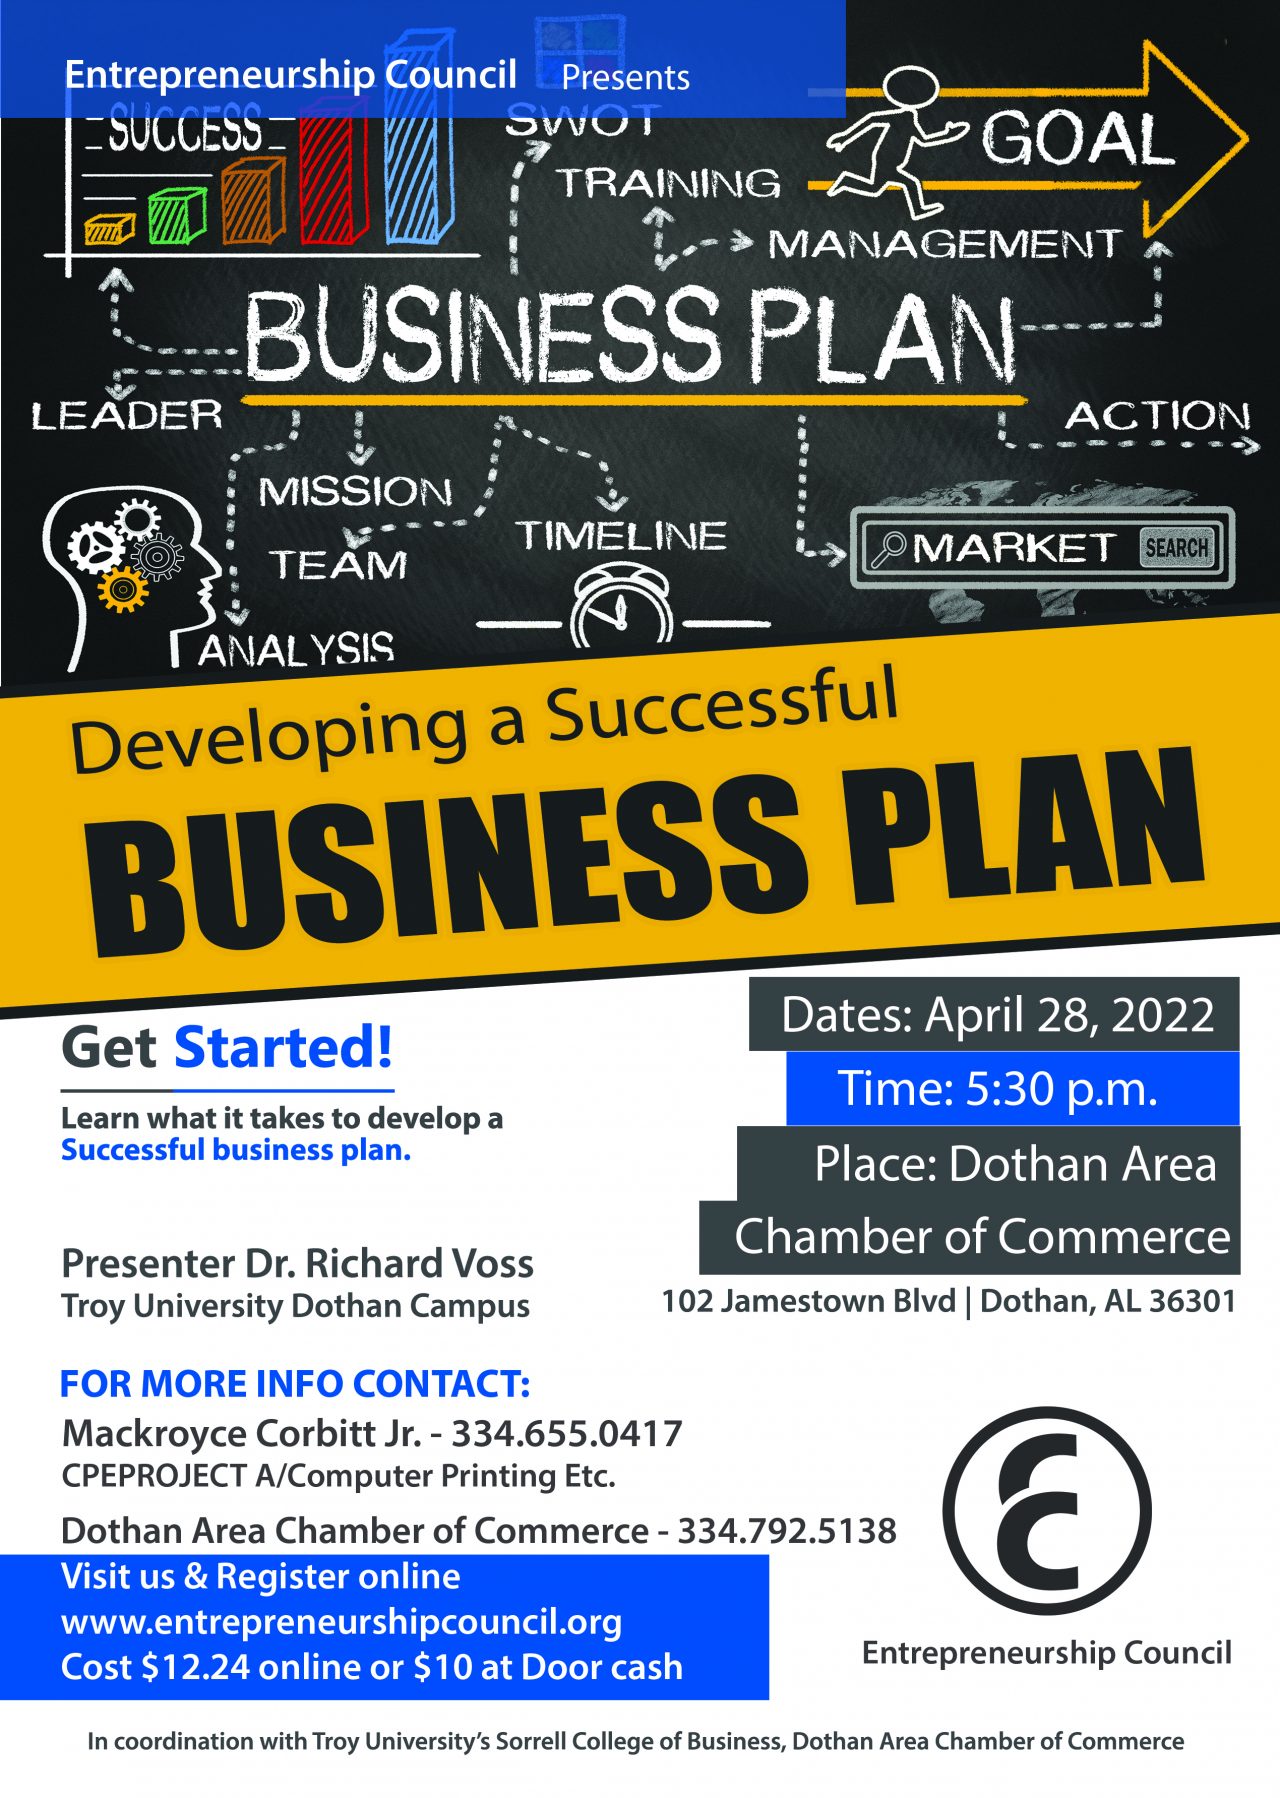 project on business plan entrepreneurship